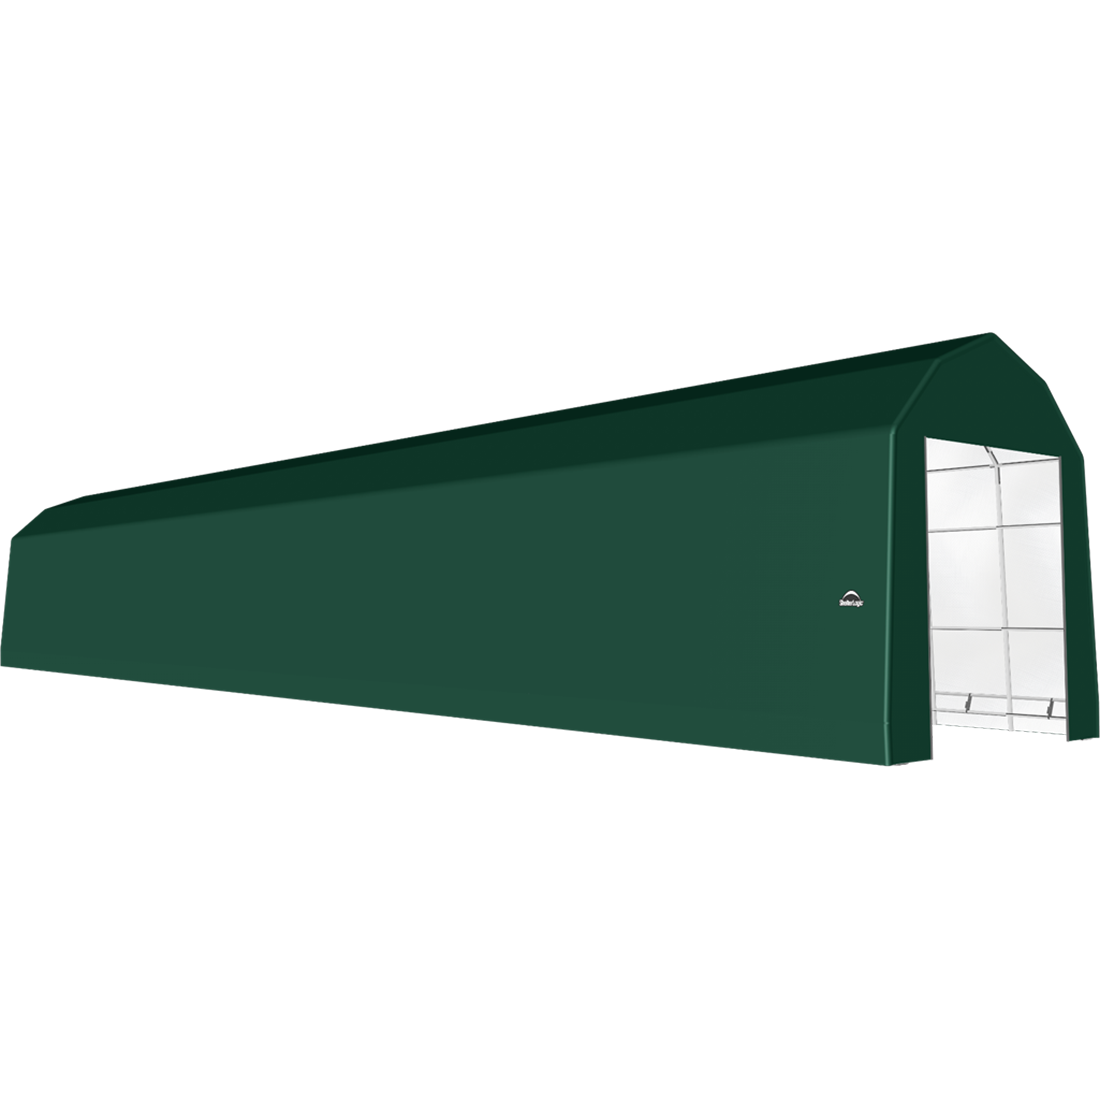 ShelterTech SP Series Barn Shelter, 15 ft. x 92 ft. x 17 ft. Heavy Duty PVC 14.5 oz. Green